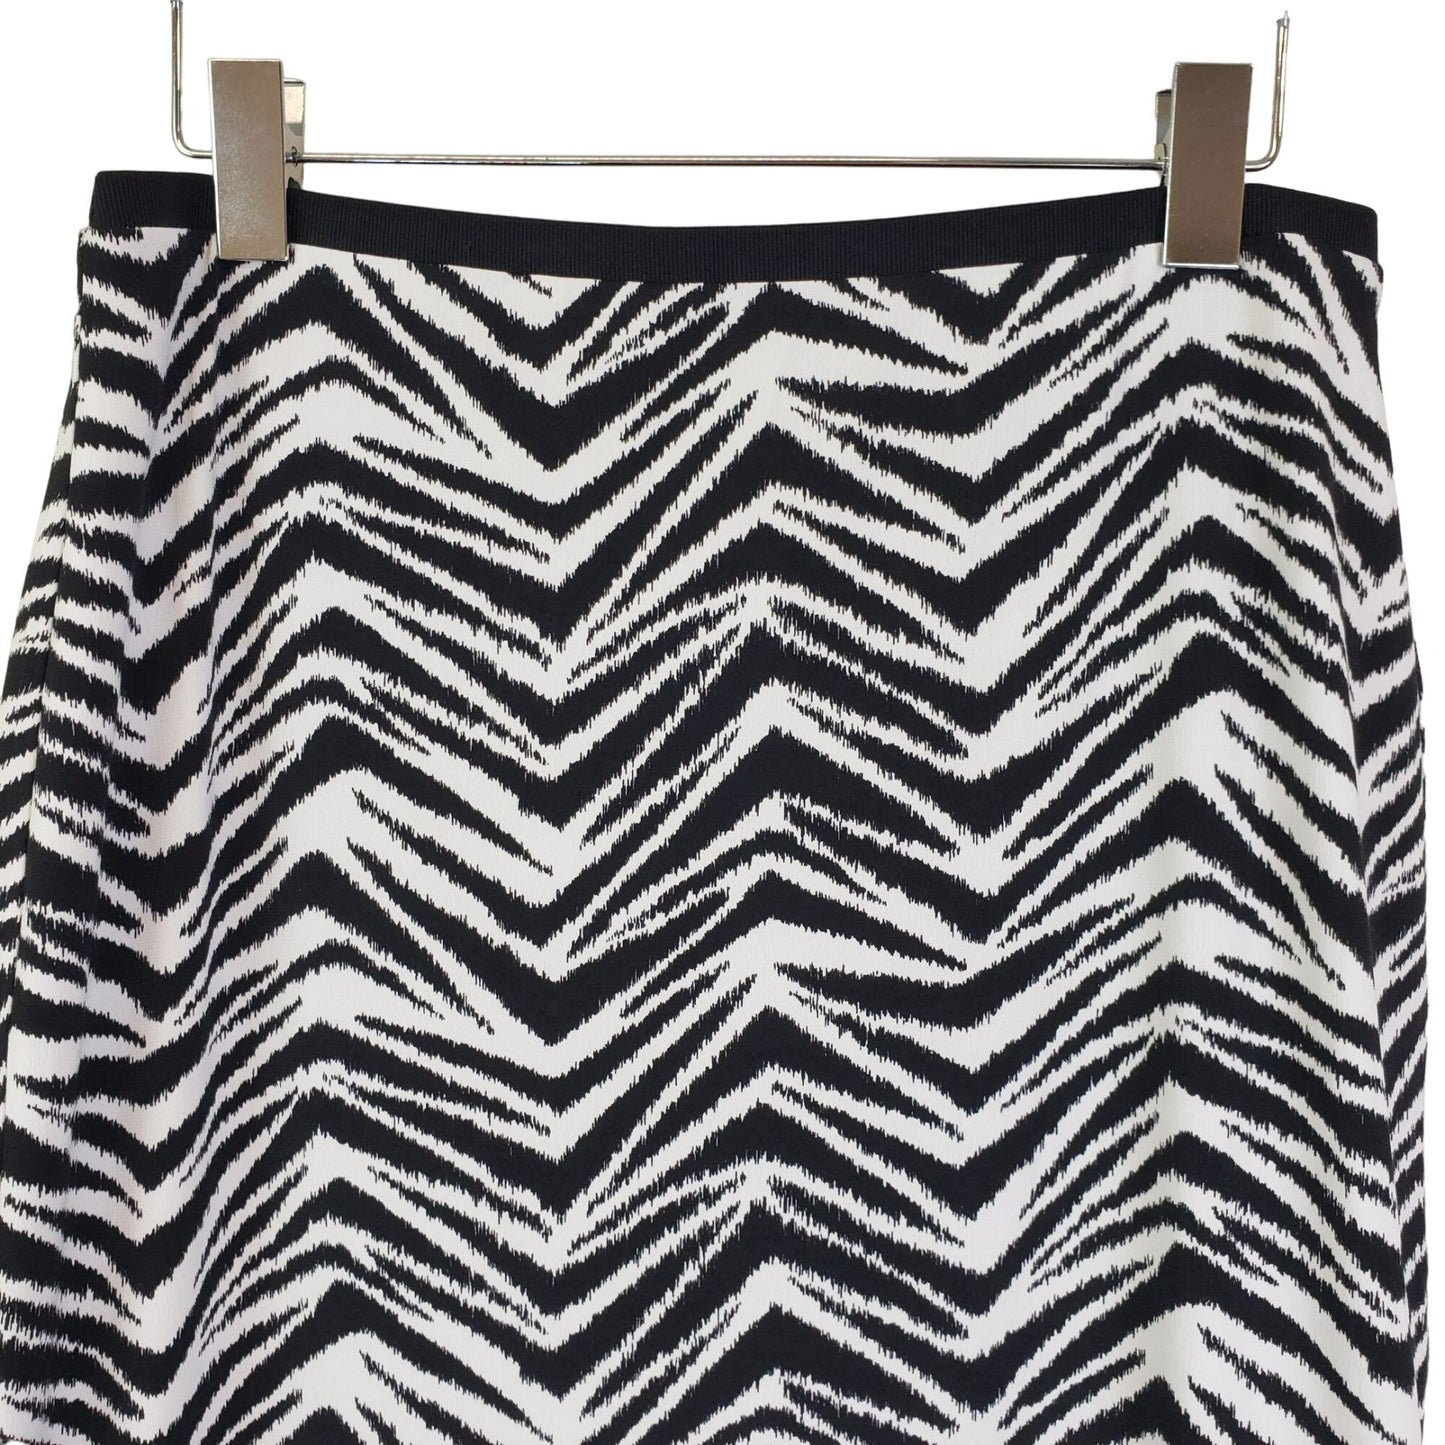 WHBM Zebra Print Pencil Skirt Size Small